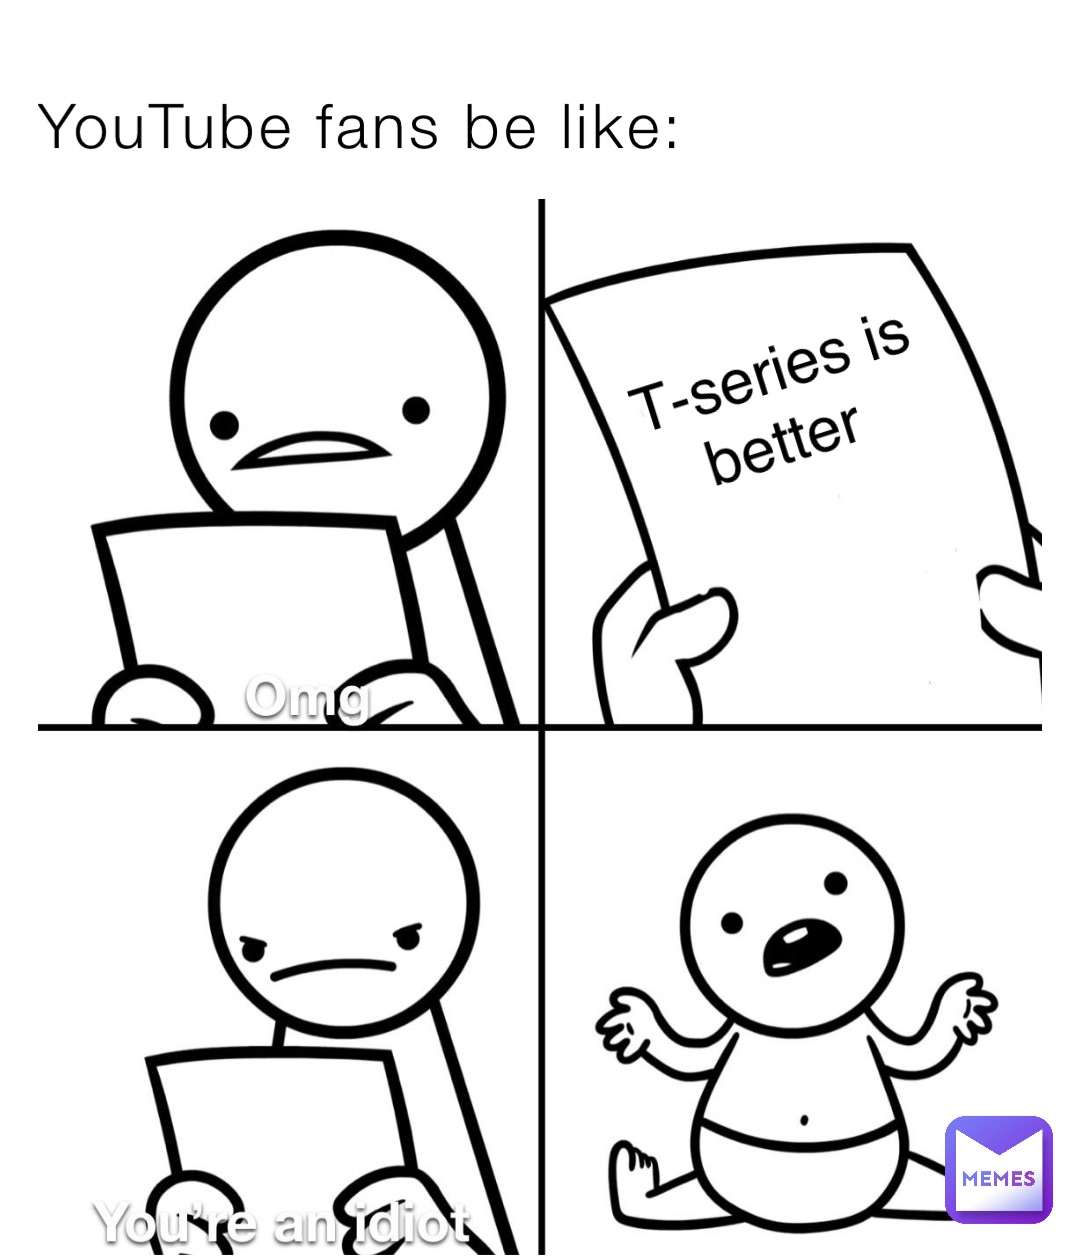 YouTube fans be like: T-series is better